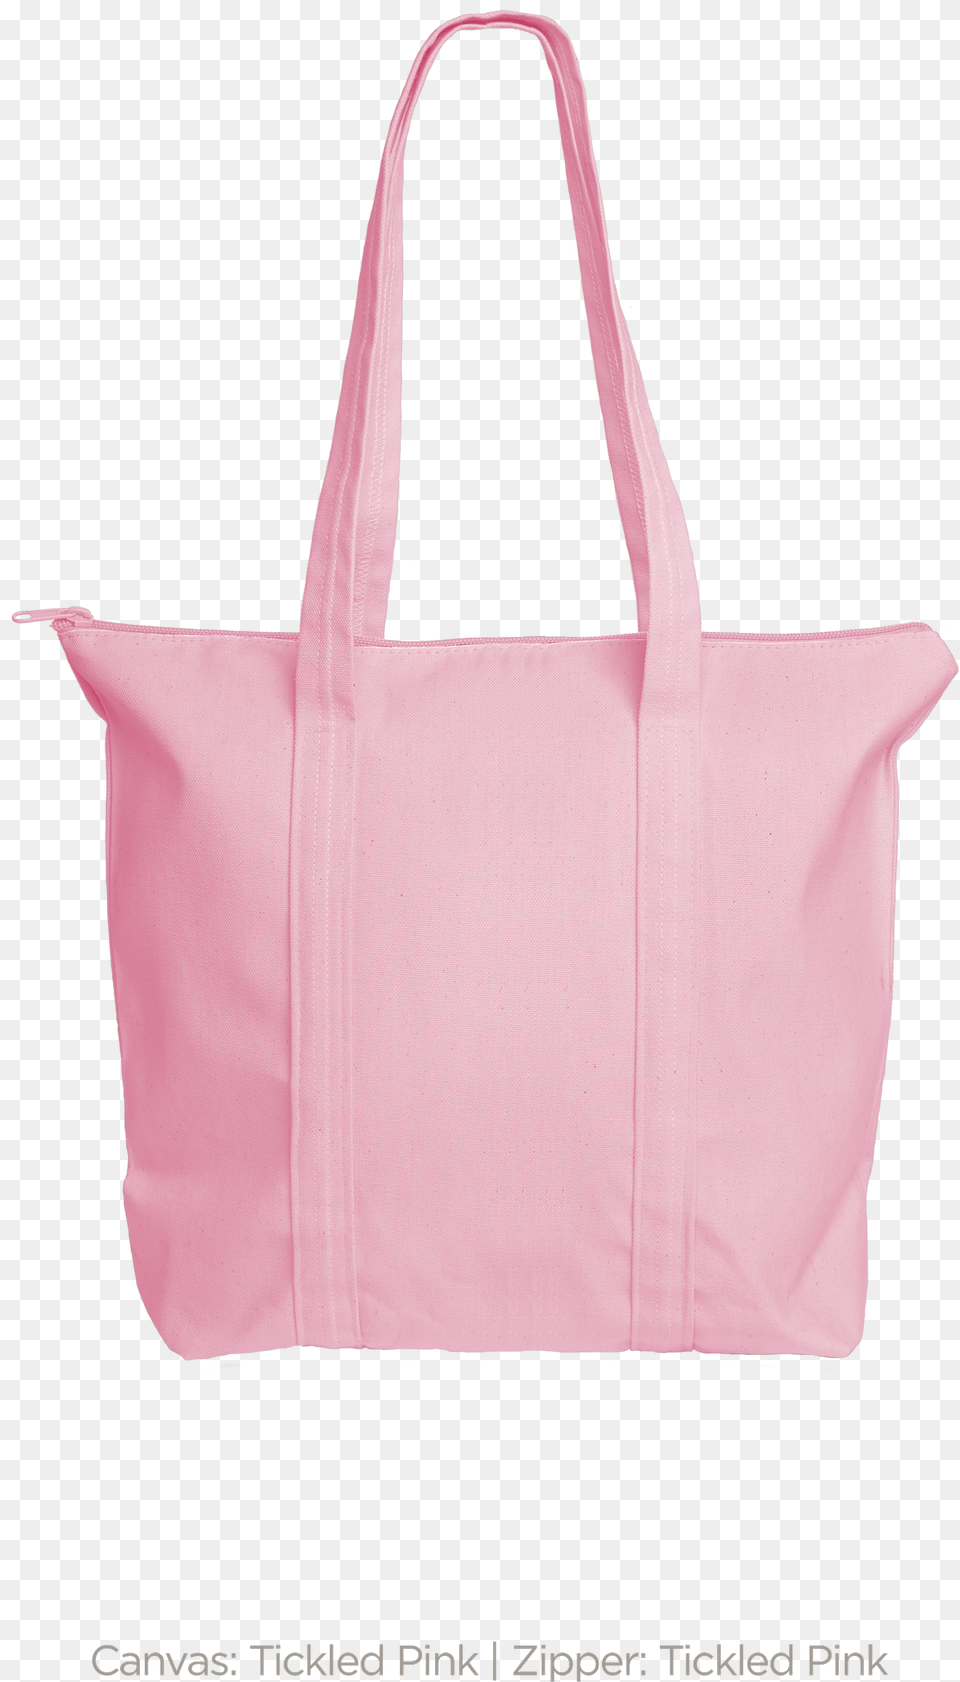 Tickled Pink Tote Bag, Accessories, Handbag, Tote Bag, Purse Free Transparent Png